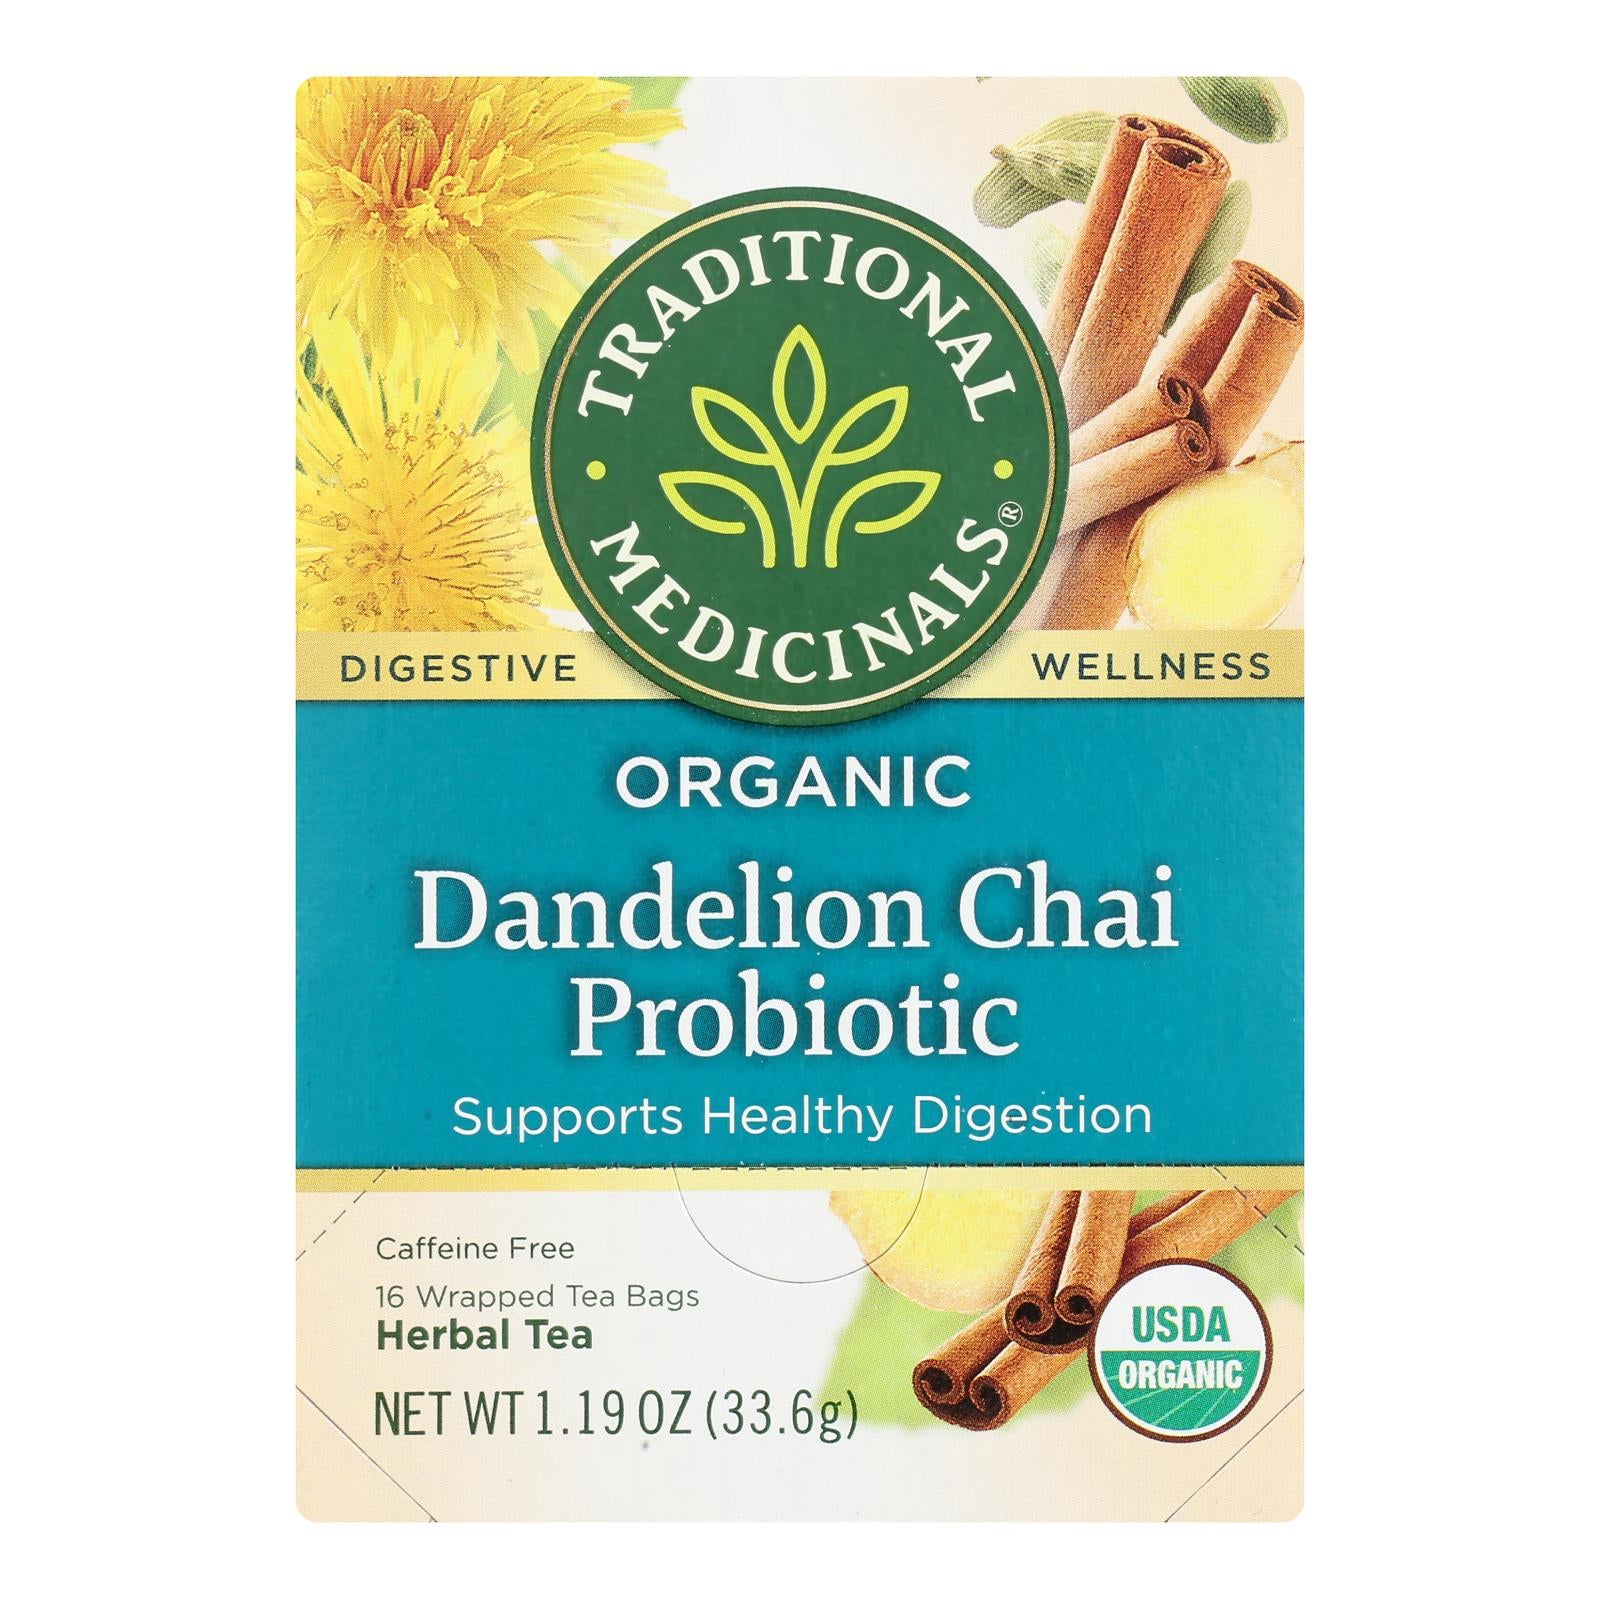 Traditional Medicinals - Probtc Tea Dandeln Ch - Case Of 6 - 16 Bag